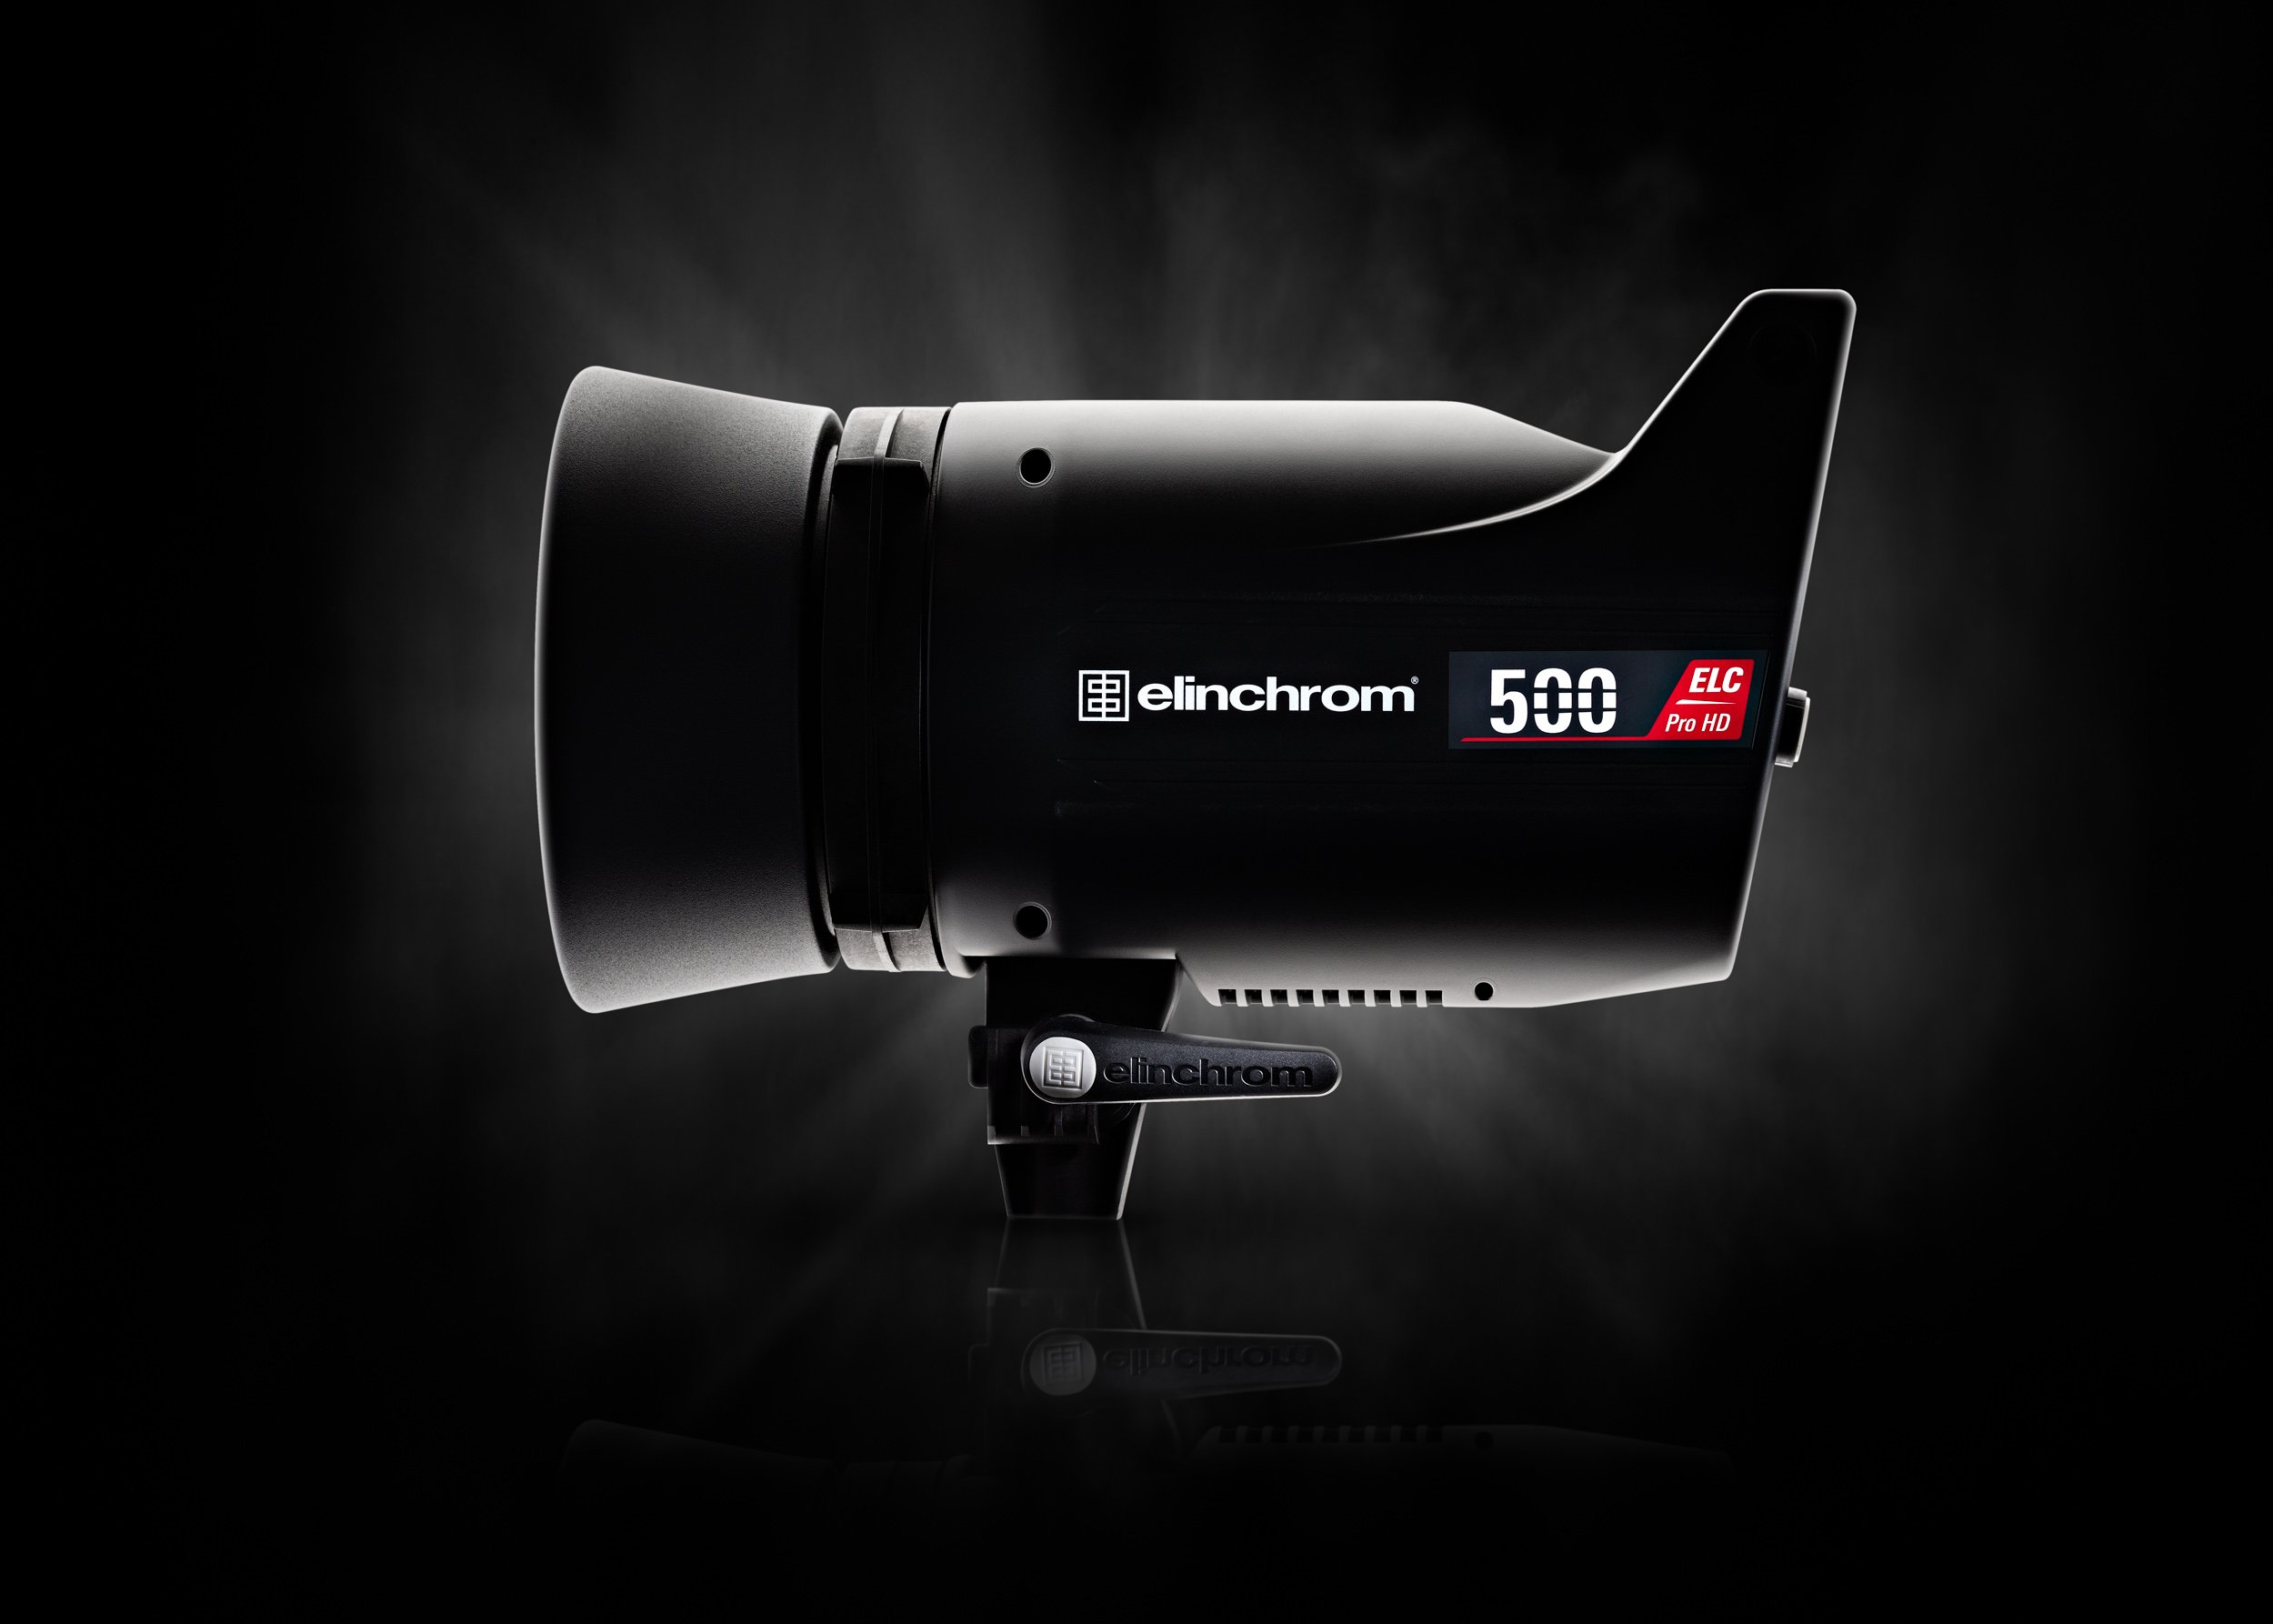 Elinchrom ELC 500 Pro HD | Commercial Product Shot